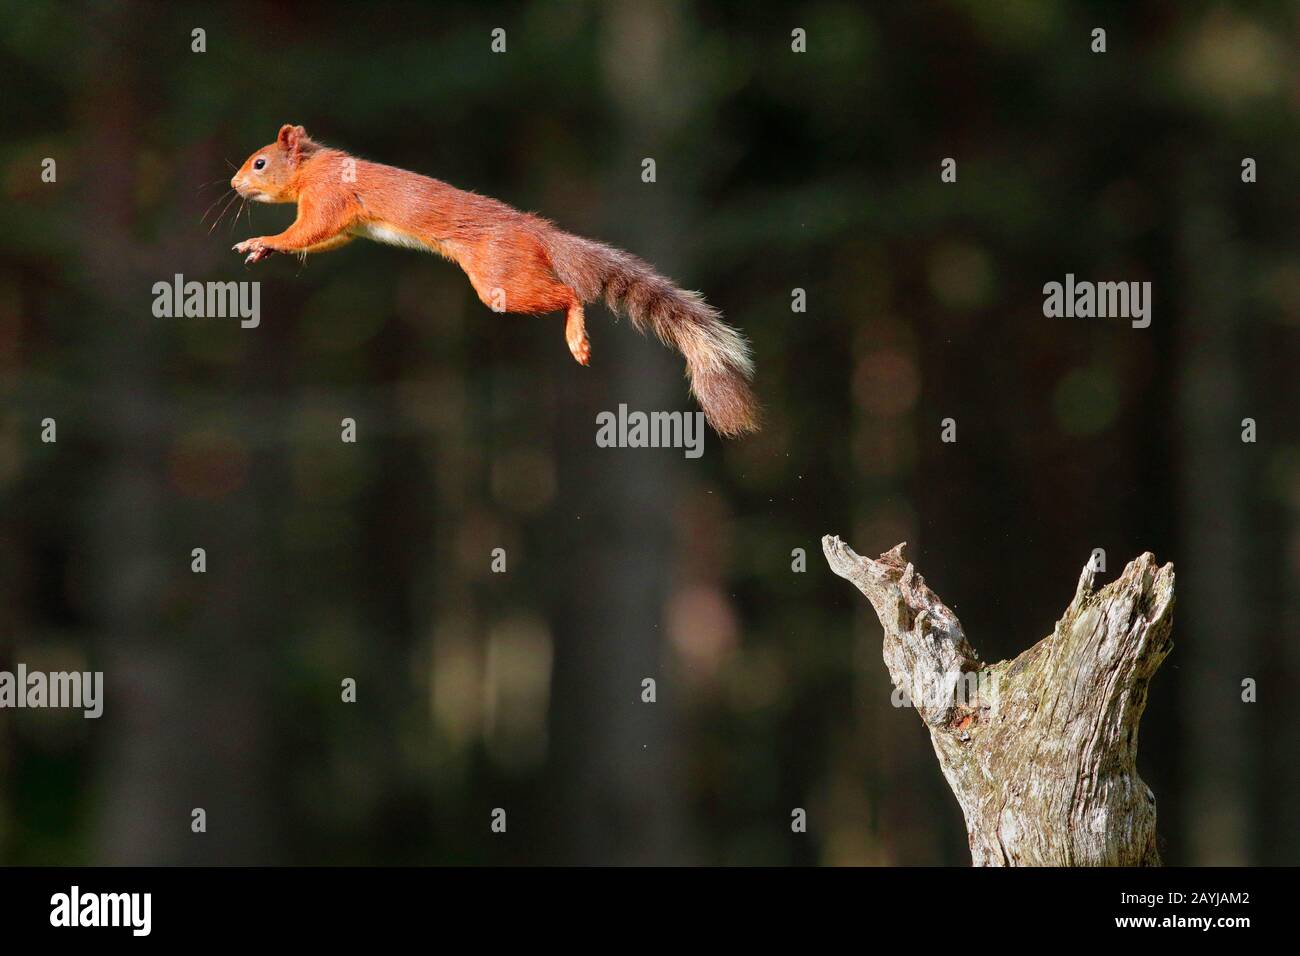 Ardilla roja europea, ardilla roja euroasiática (Sciurus vulgaris), saltando de un tocón de árbol muerto, vista lateral, Suiza Foto de stock